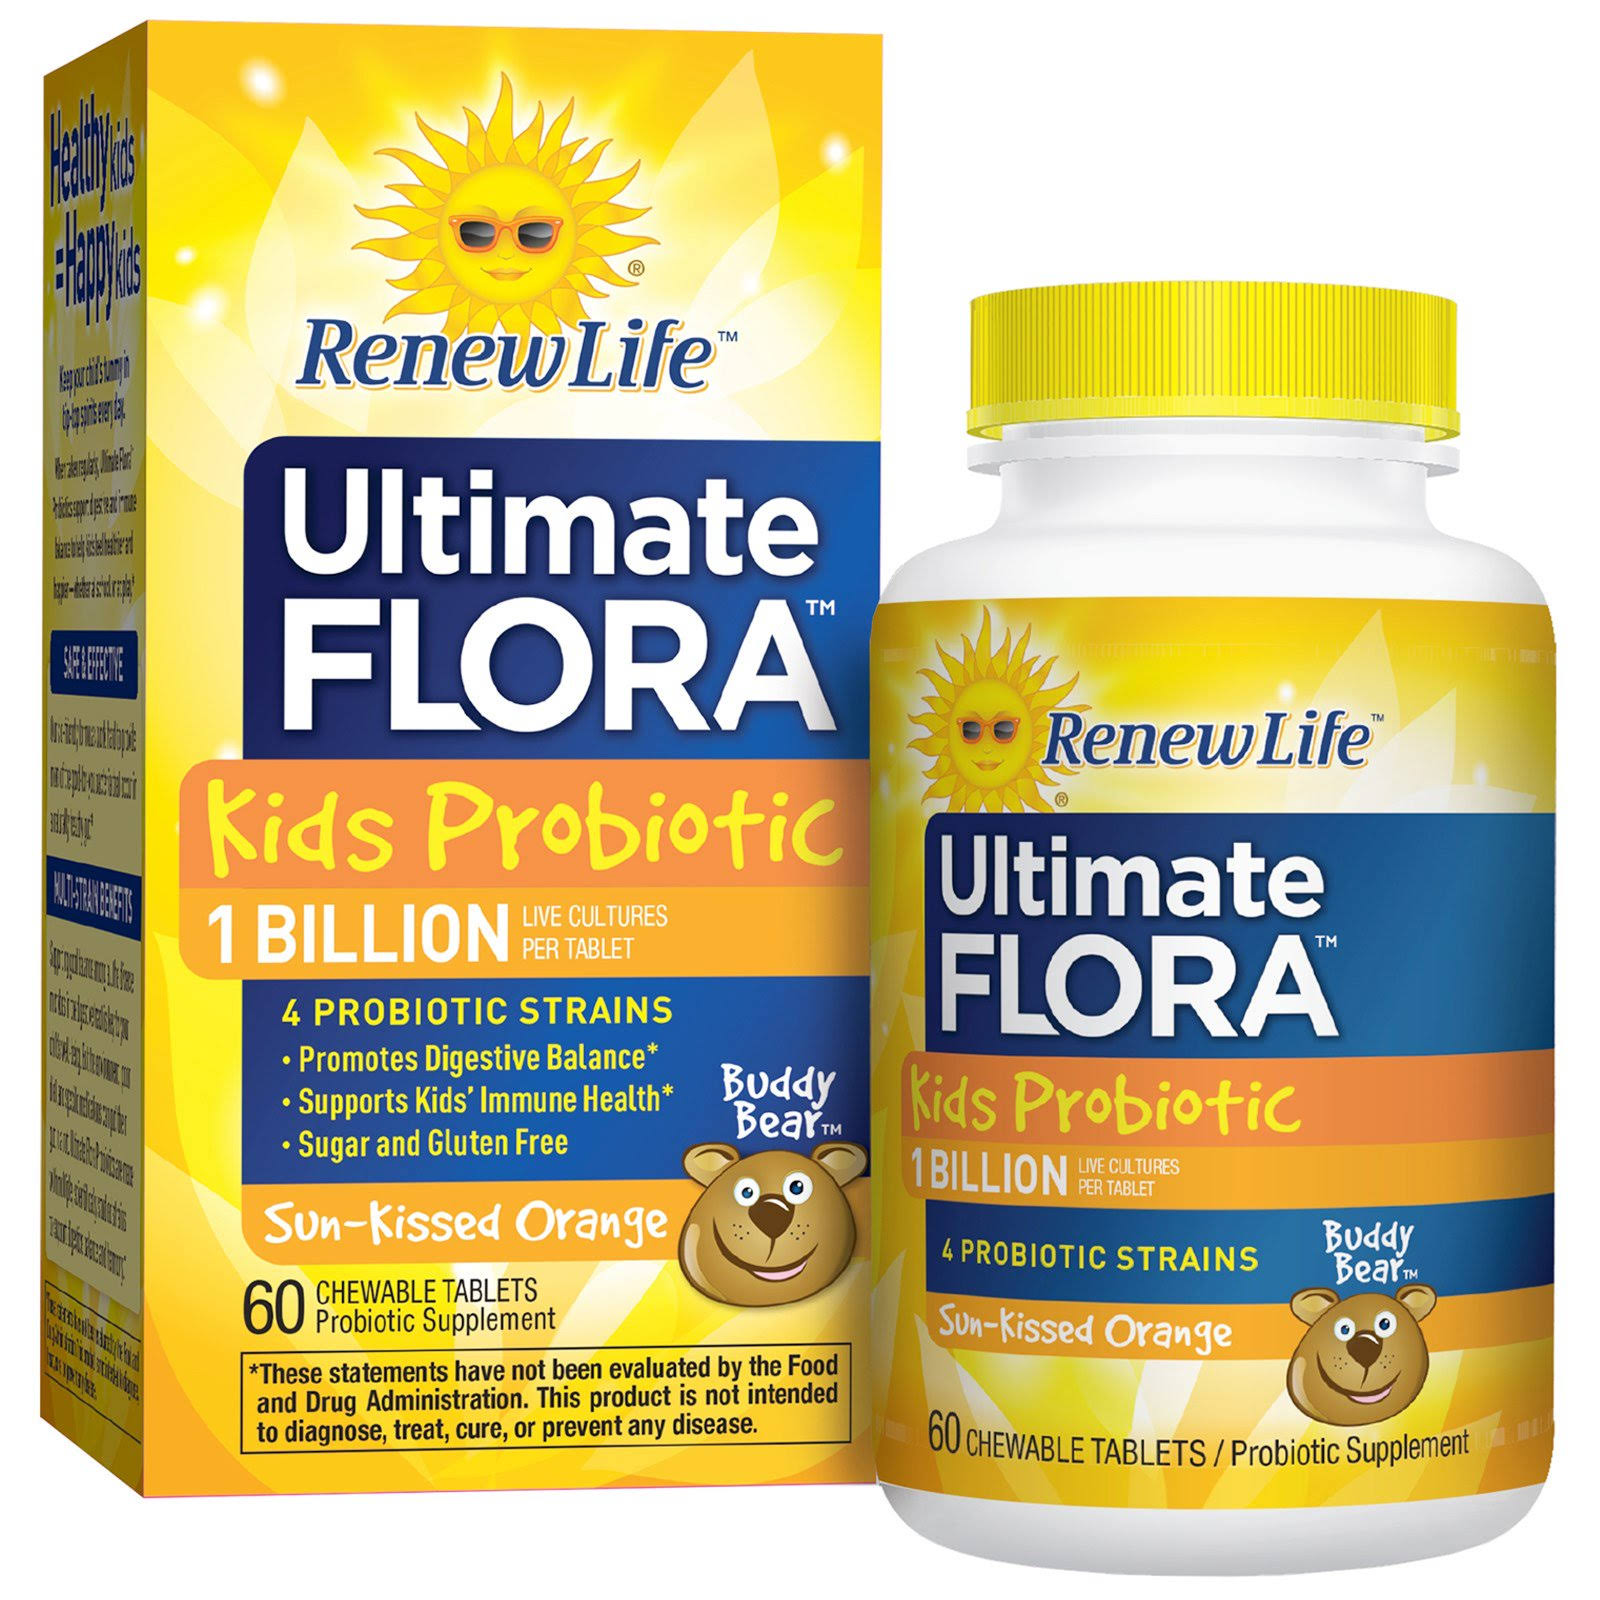 Renew Life Ultimate Flora Kids Probiotic Chewable Tablets - Sun-kissed Orange, x60